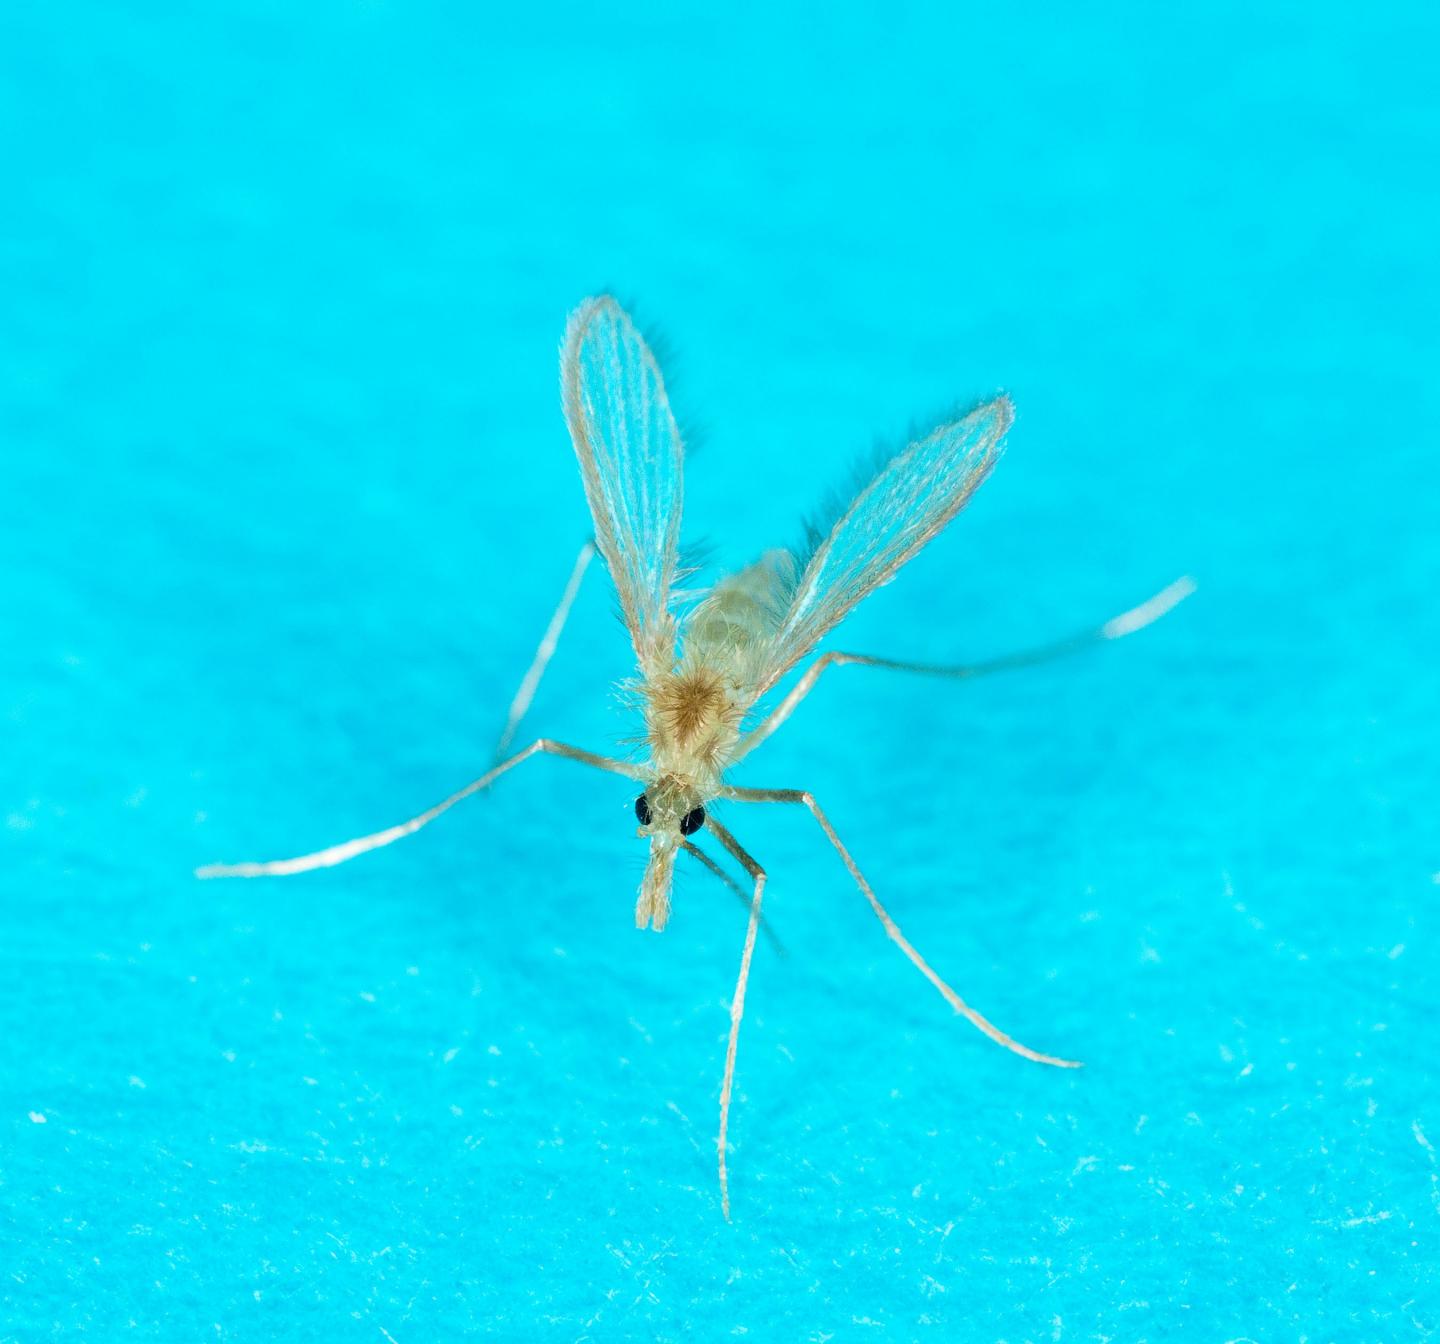 Immune Reaction to Sandfly Saliva Varies between Individuals Living in Endemic Areas